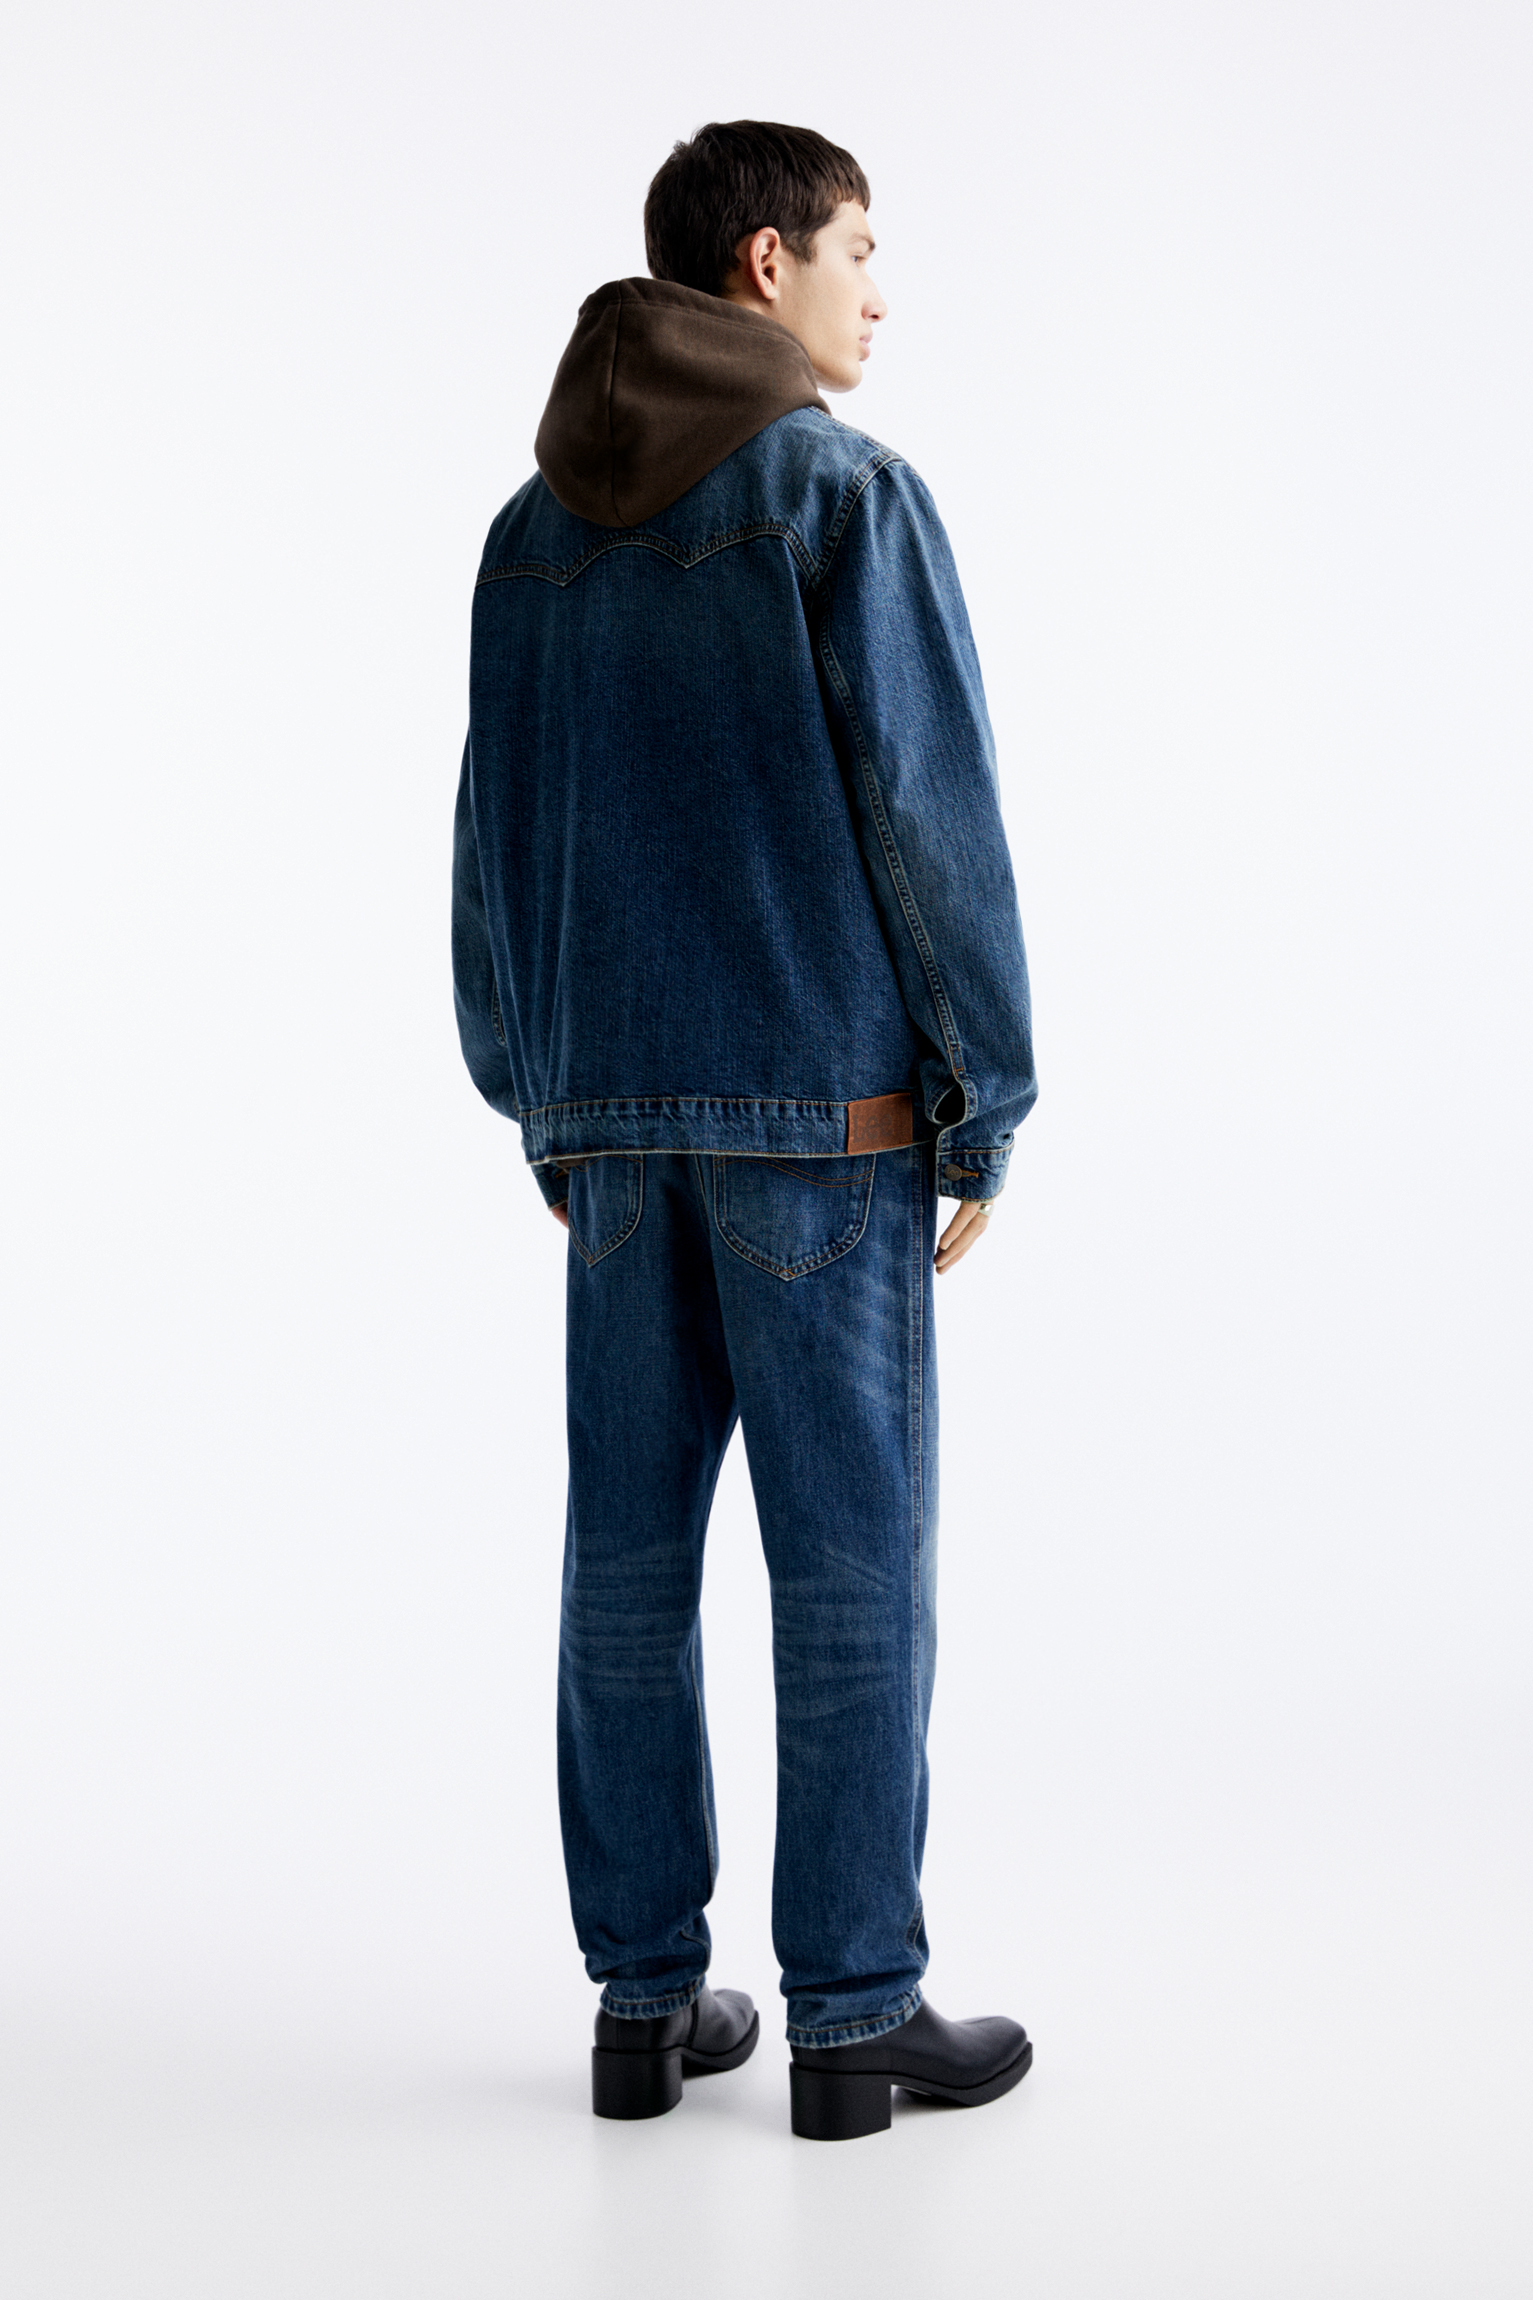 Denim Republic - Jean jacket on Designer Wardrobe